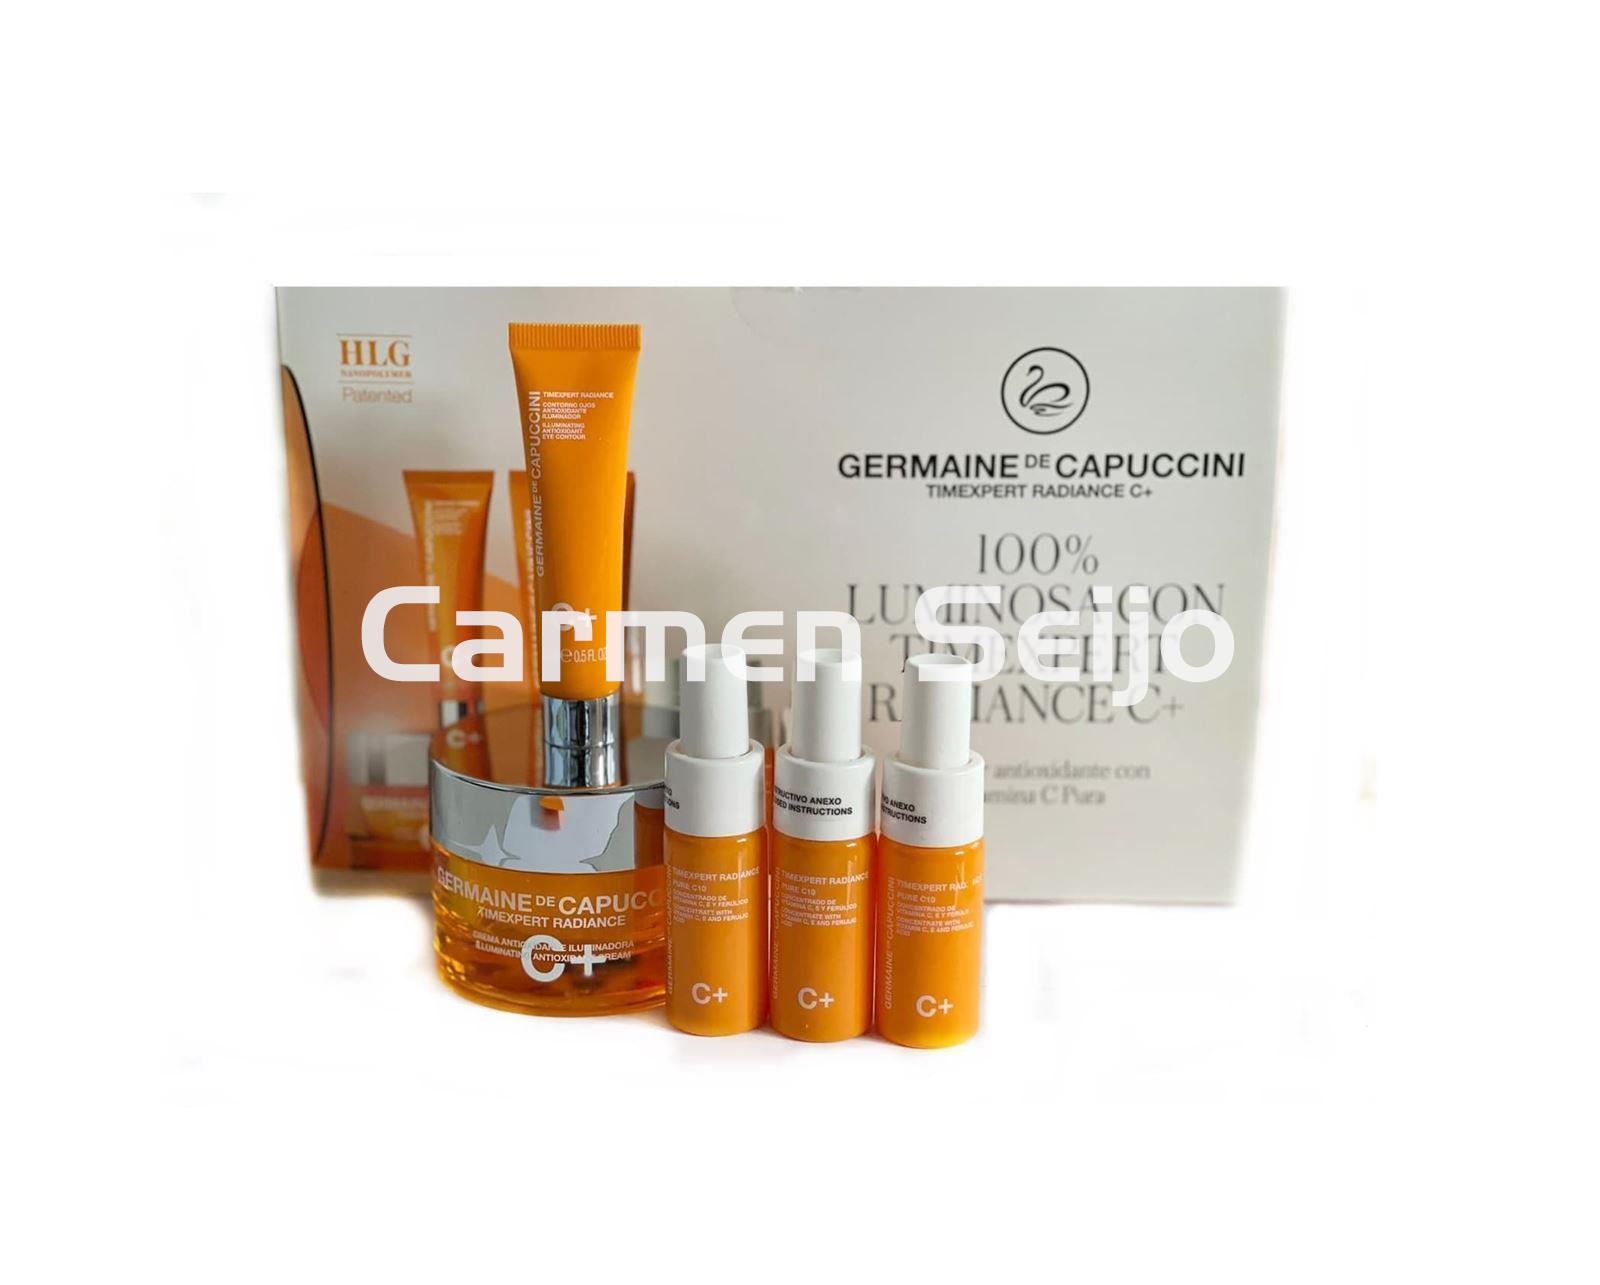 Germaine de Capuccini Pack Crema Antioxidante Timexpert Radiance C+ - Imagen 1